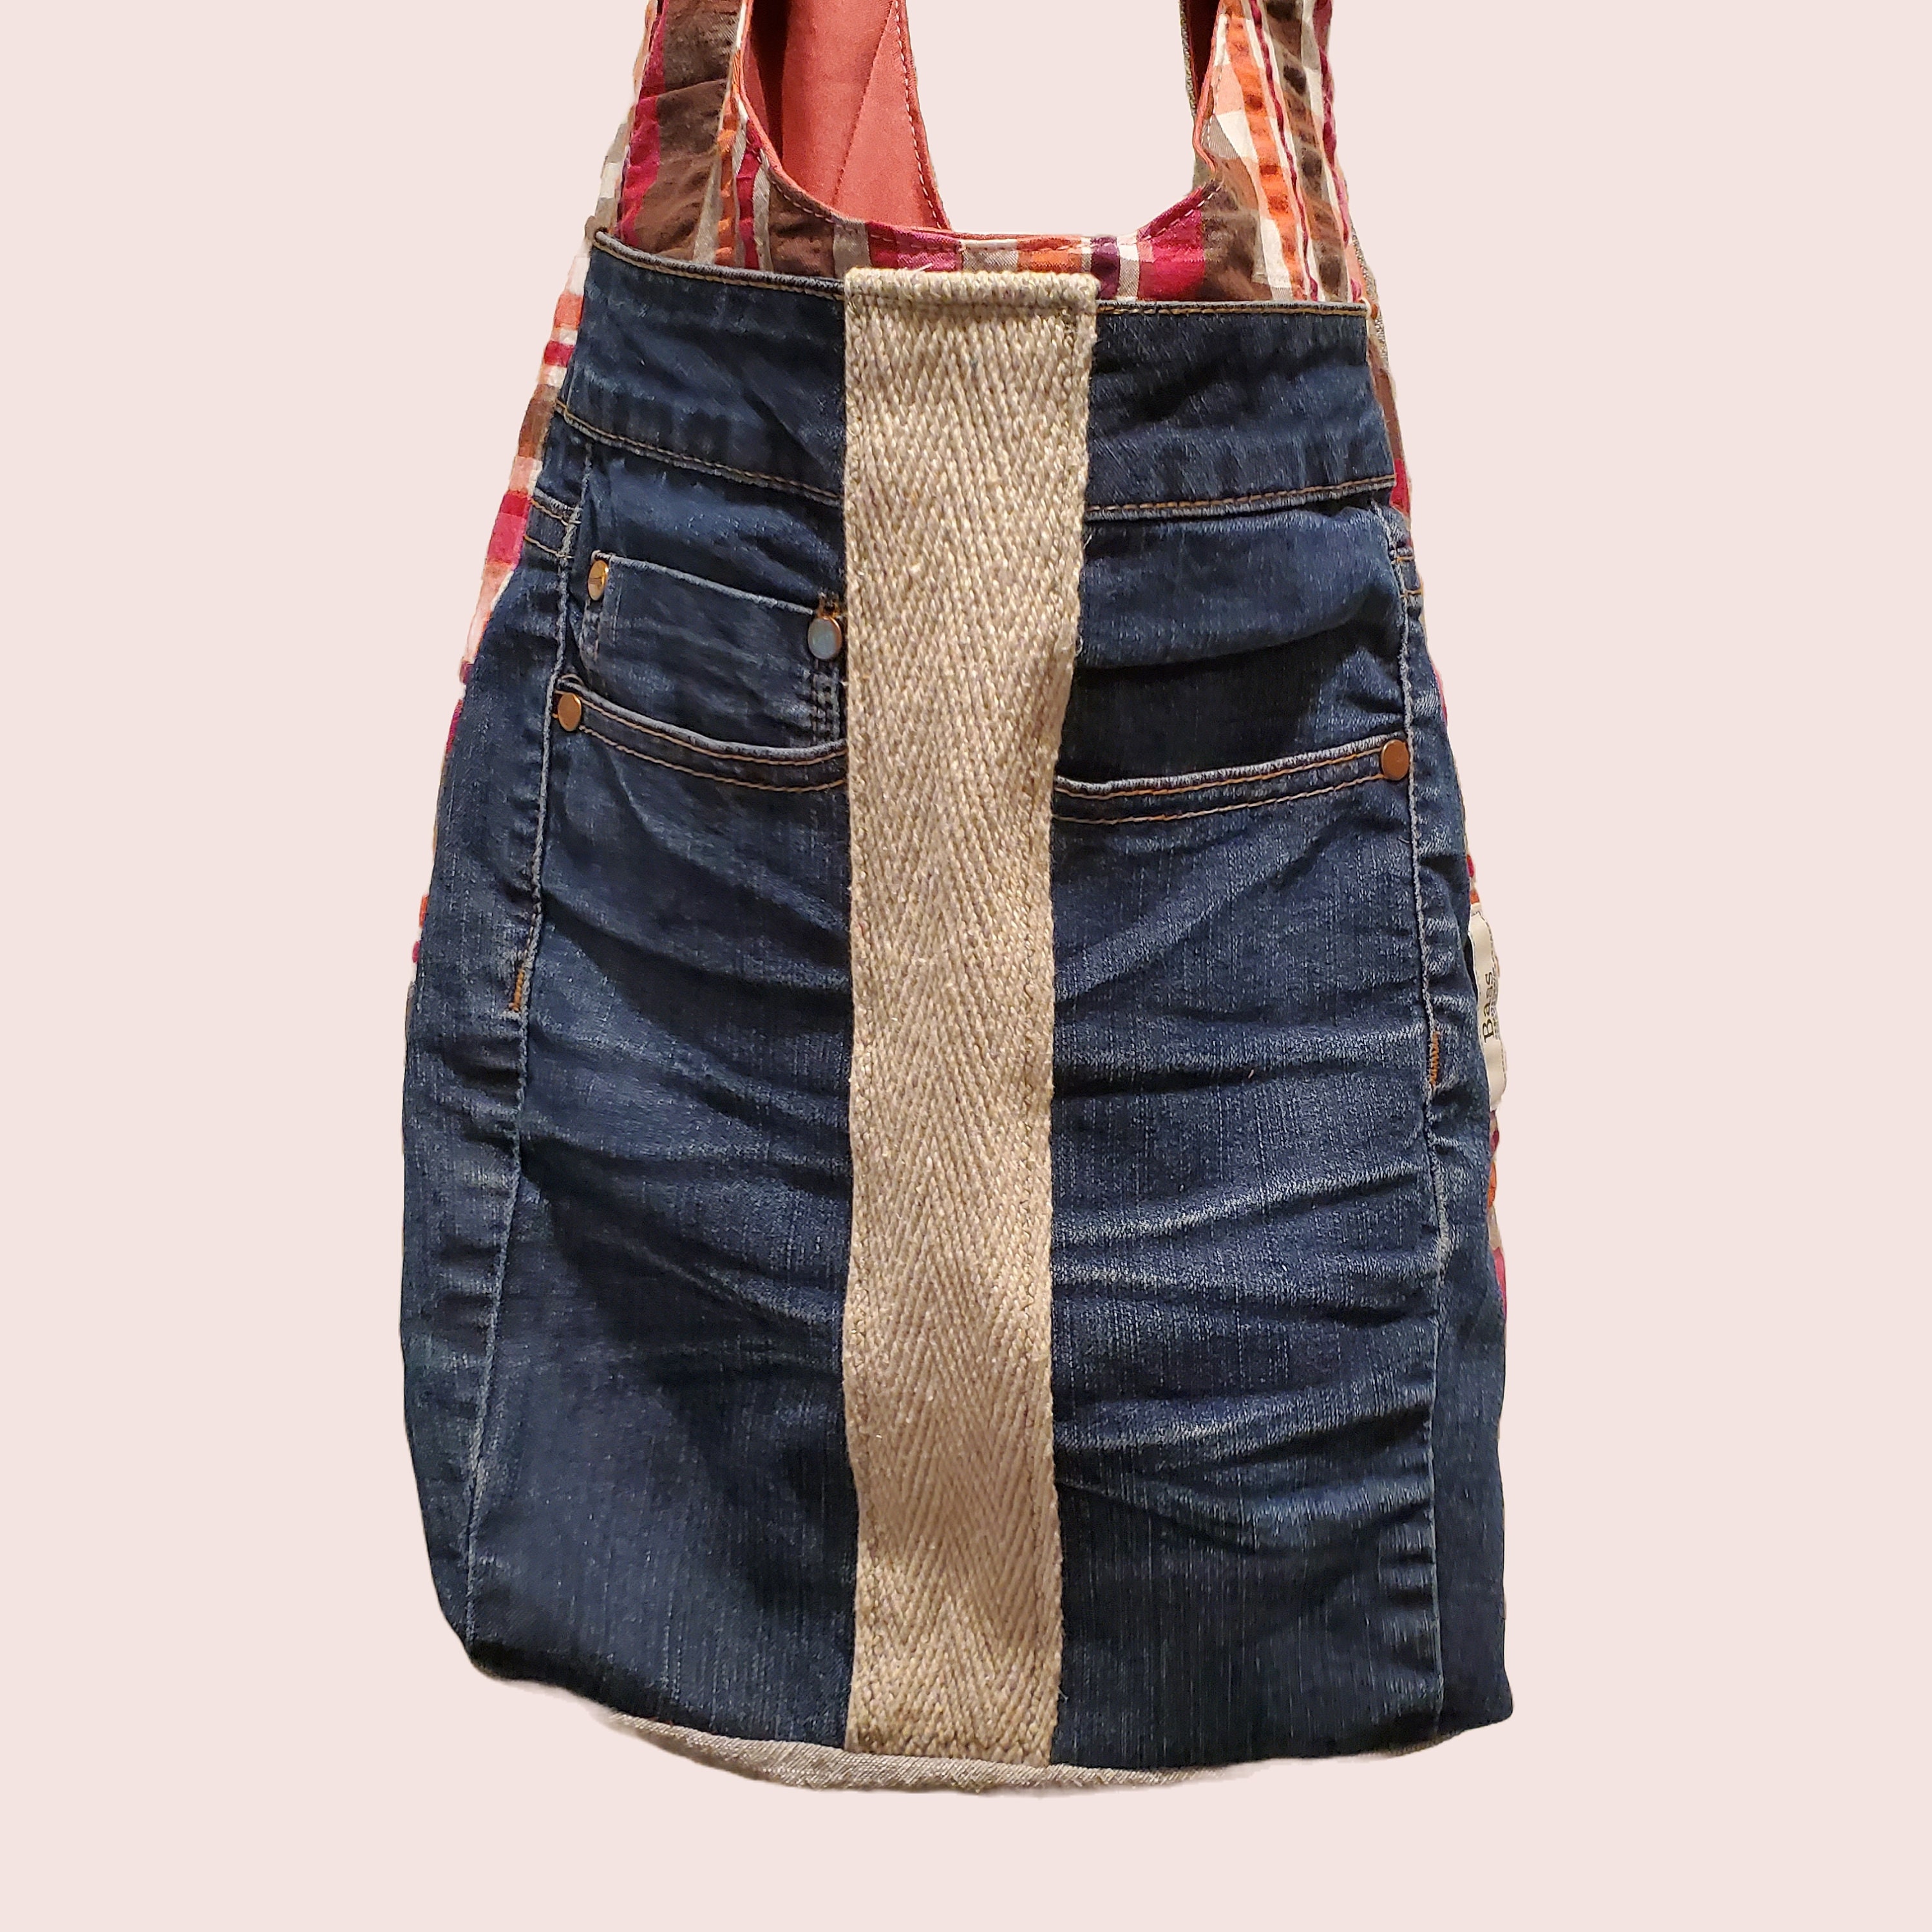 FunnyBeans Denim Purses & Handbags for Women, Unique Jean Hobo